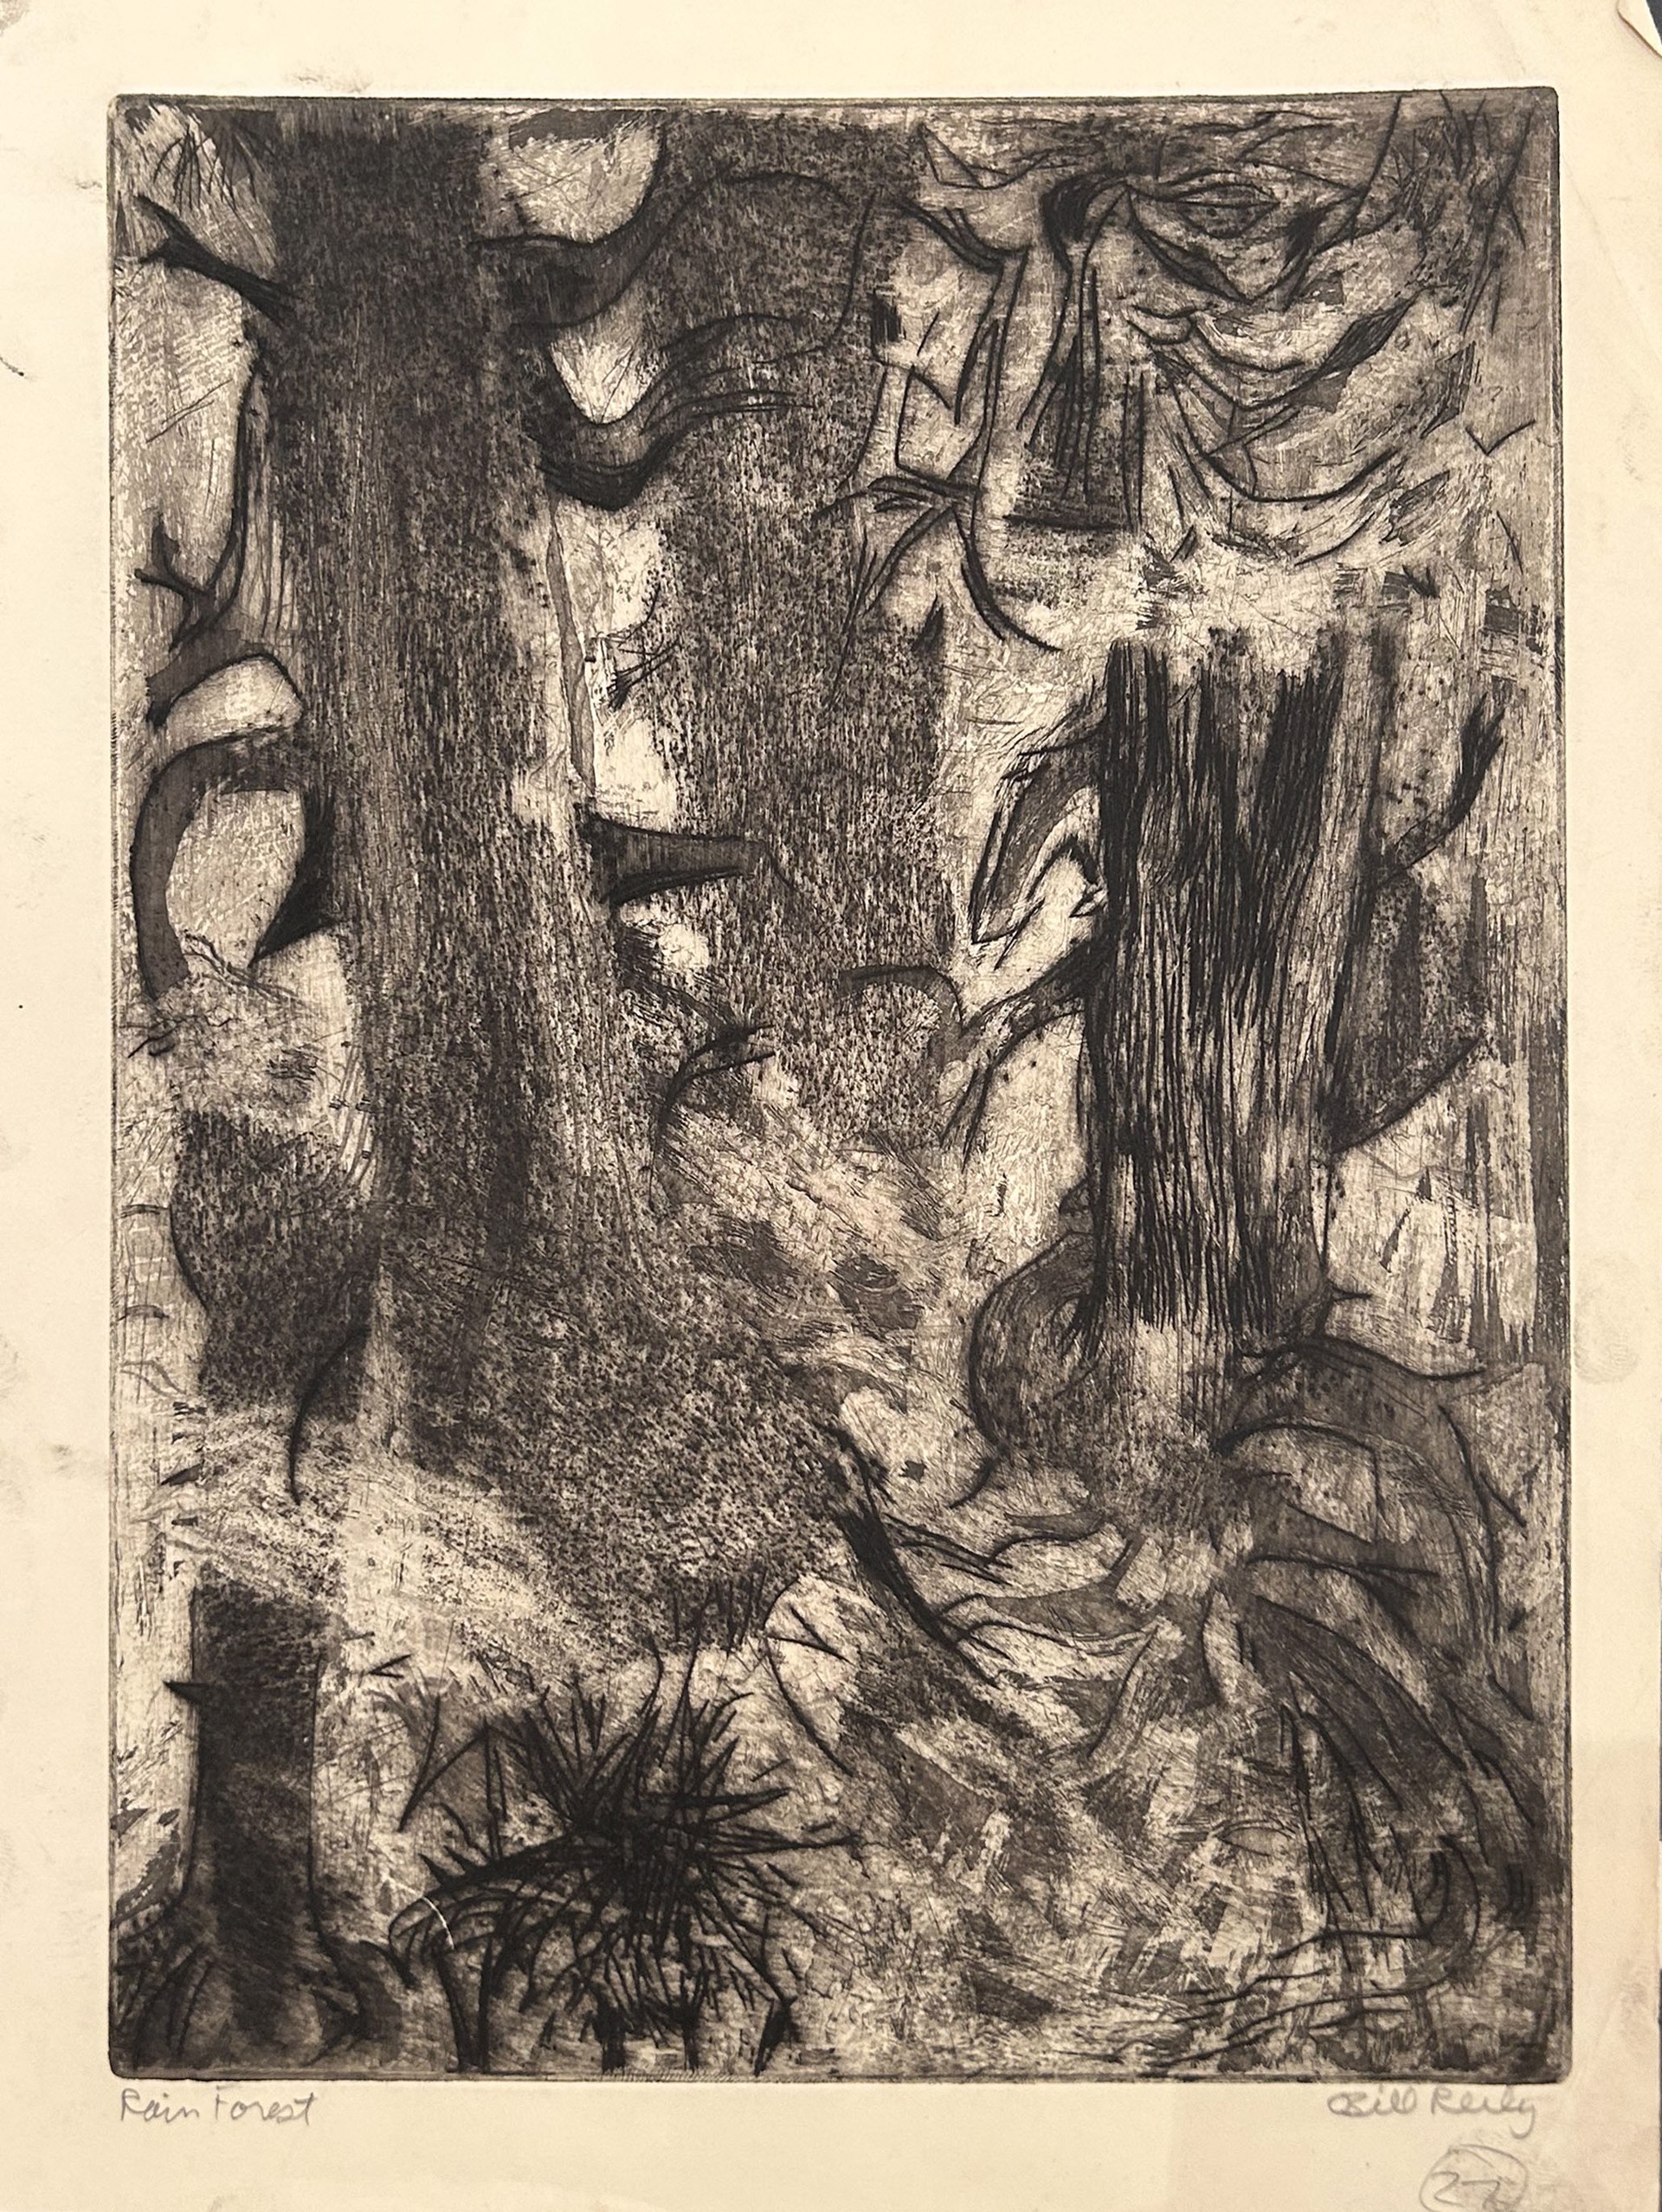 27b. Rain Forest by Bill Reily - Prints